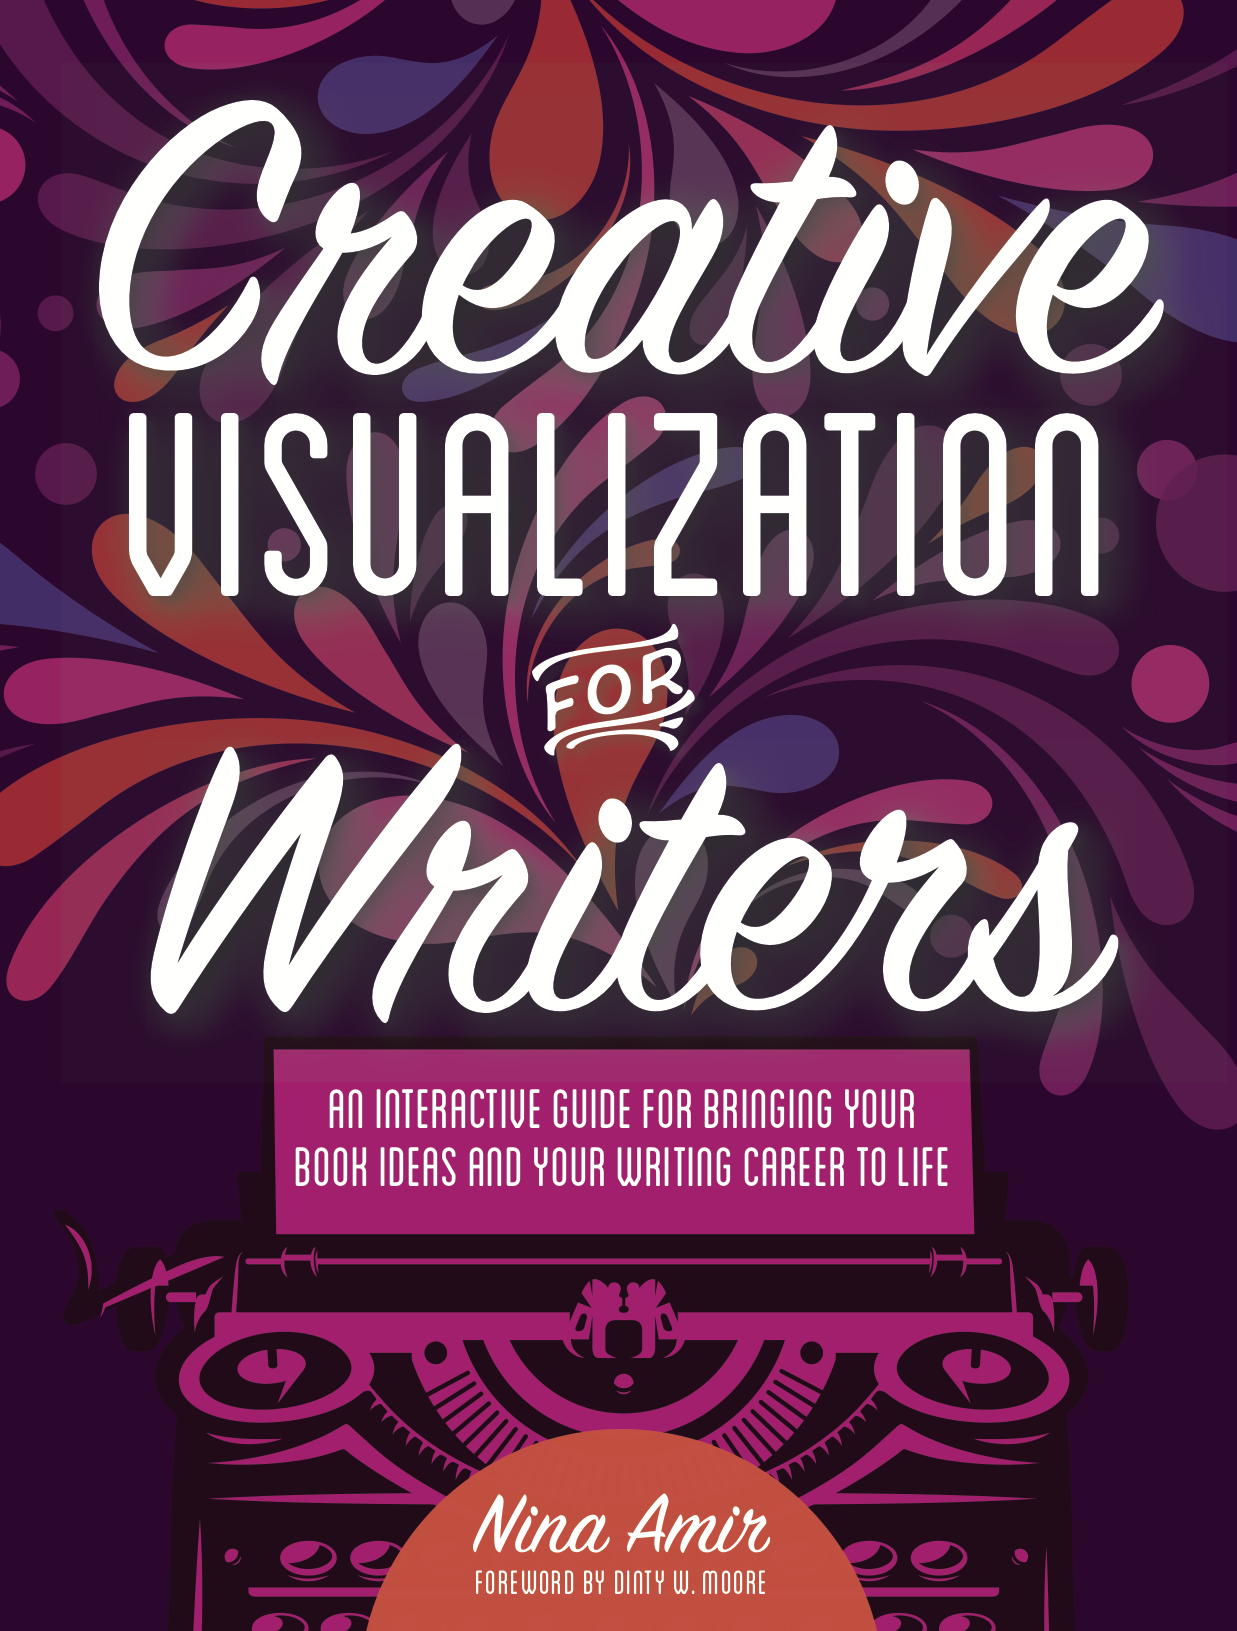 Nina Amir's New Book: Creative Visualization for Writers